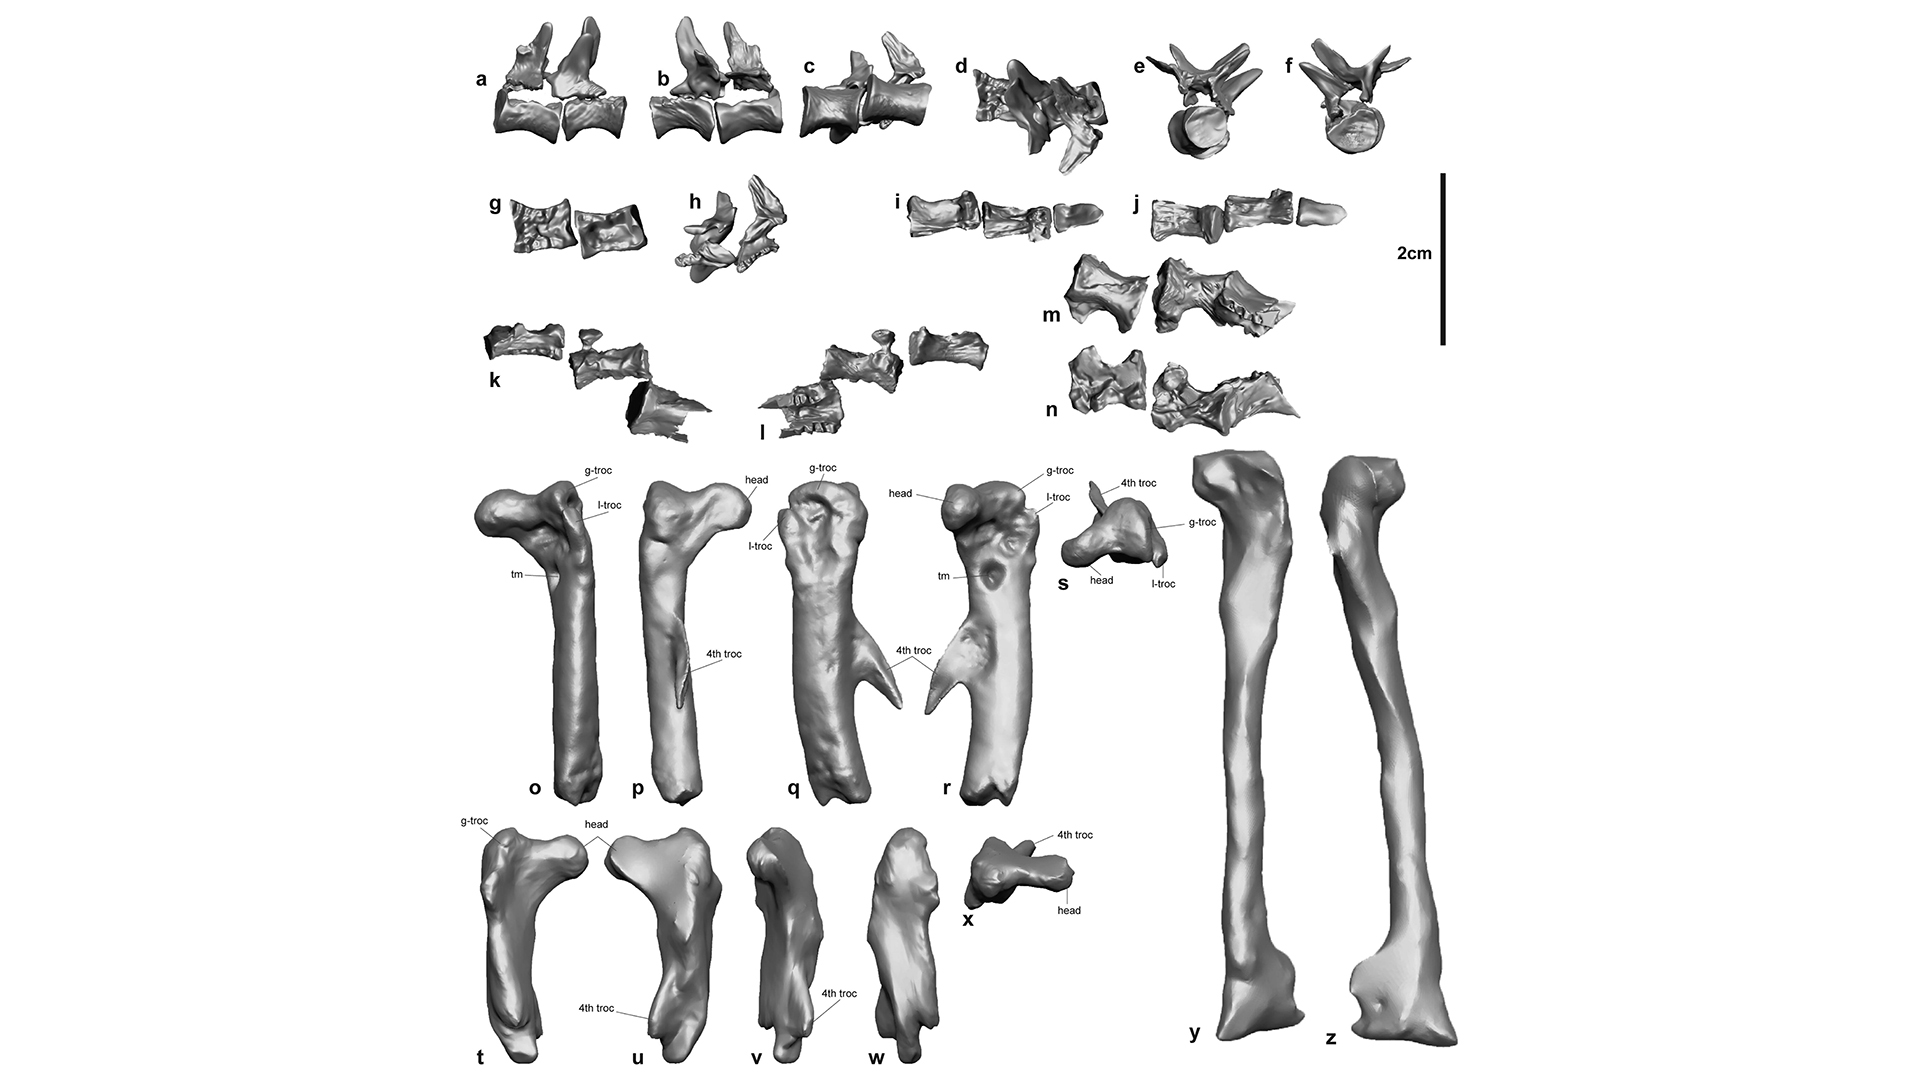 Digital models of ornithopod bones found in the abdomen of Confractosuchus sauroktonos.